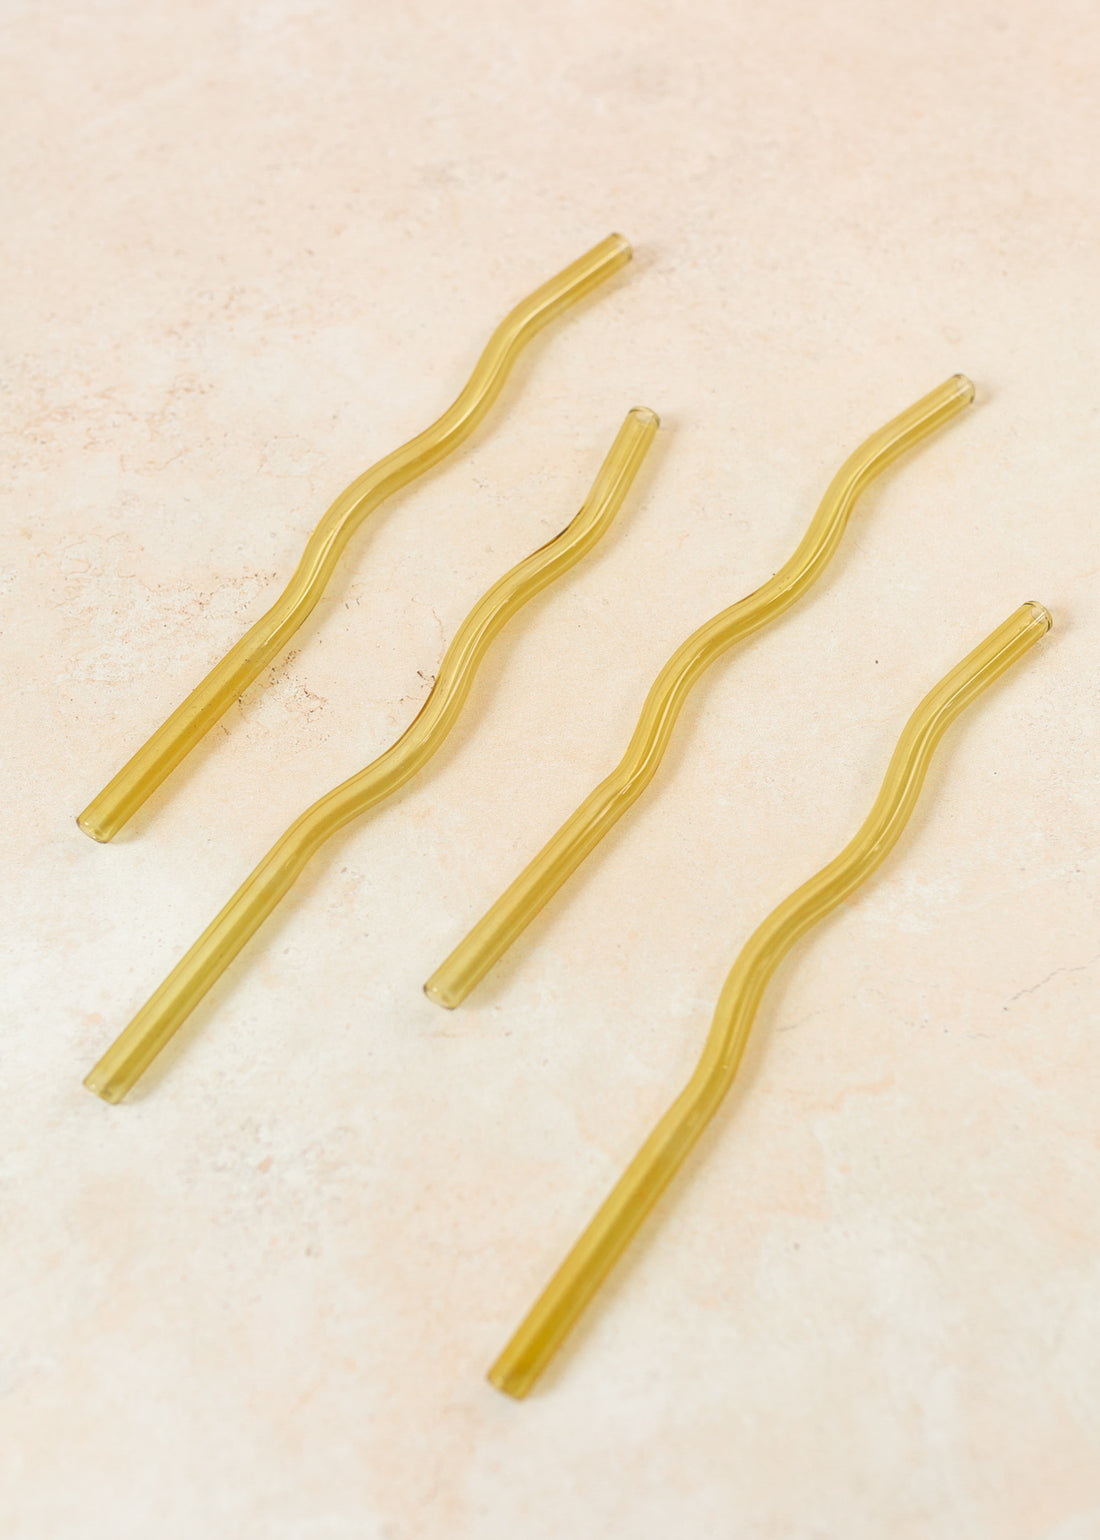 Varadero Reusable Straws  Glass straws, Colorful glass straws